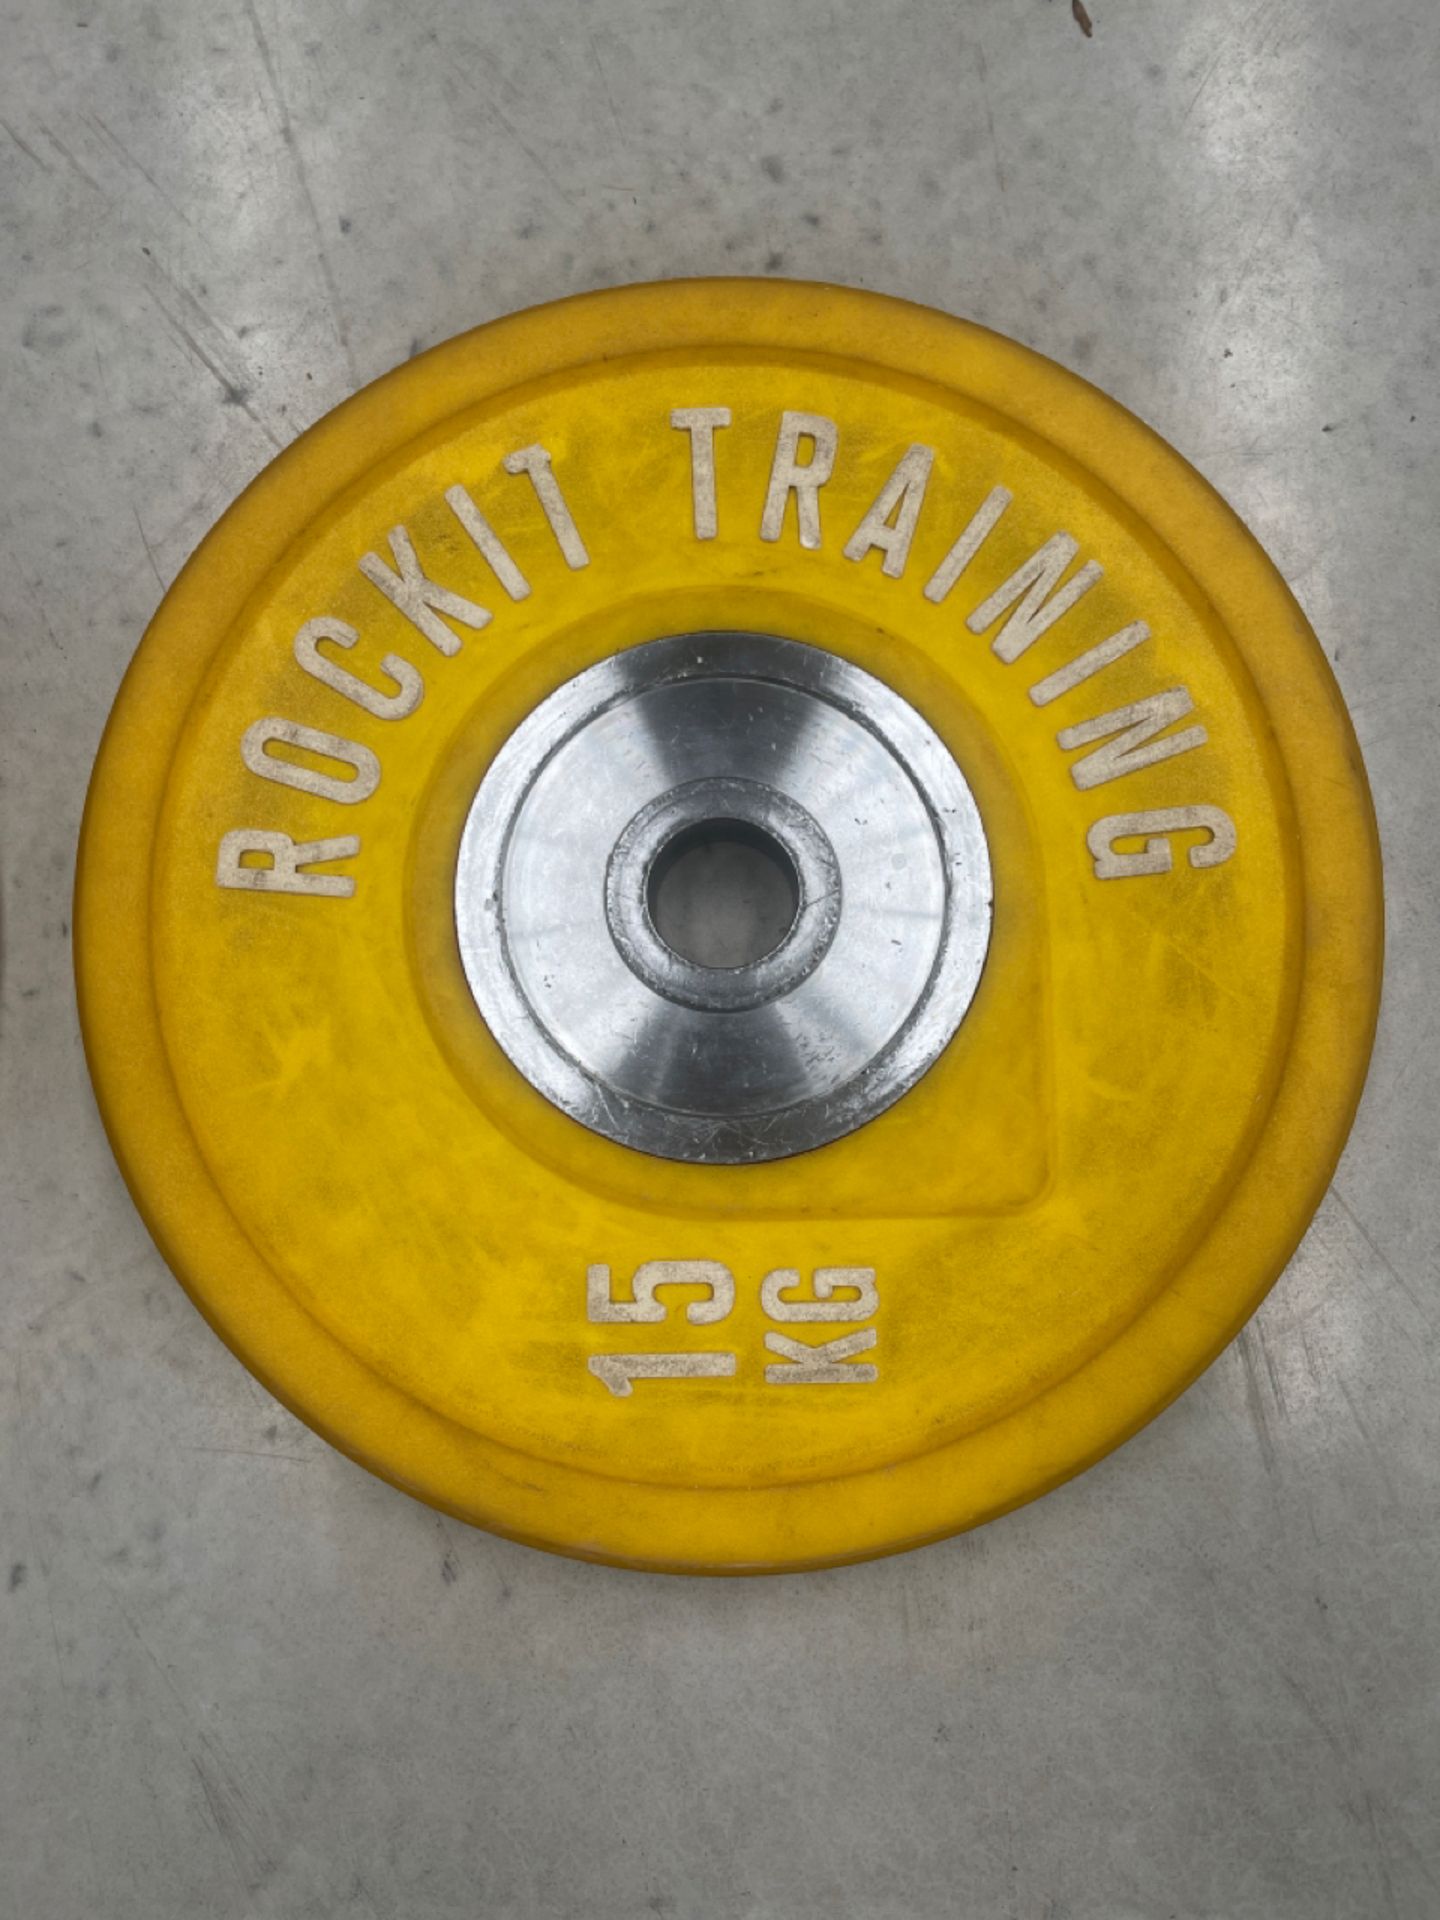 Rockit Training 15kg Bumper Plates - Image 2 of 2